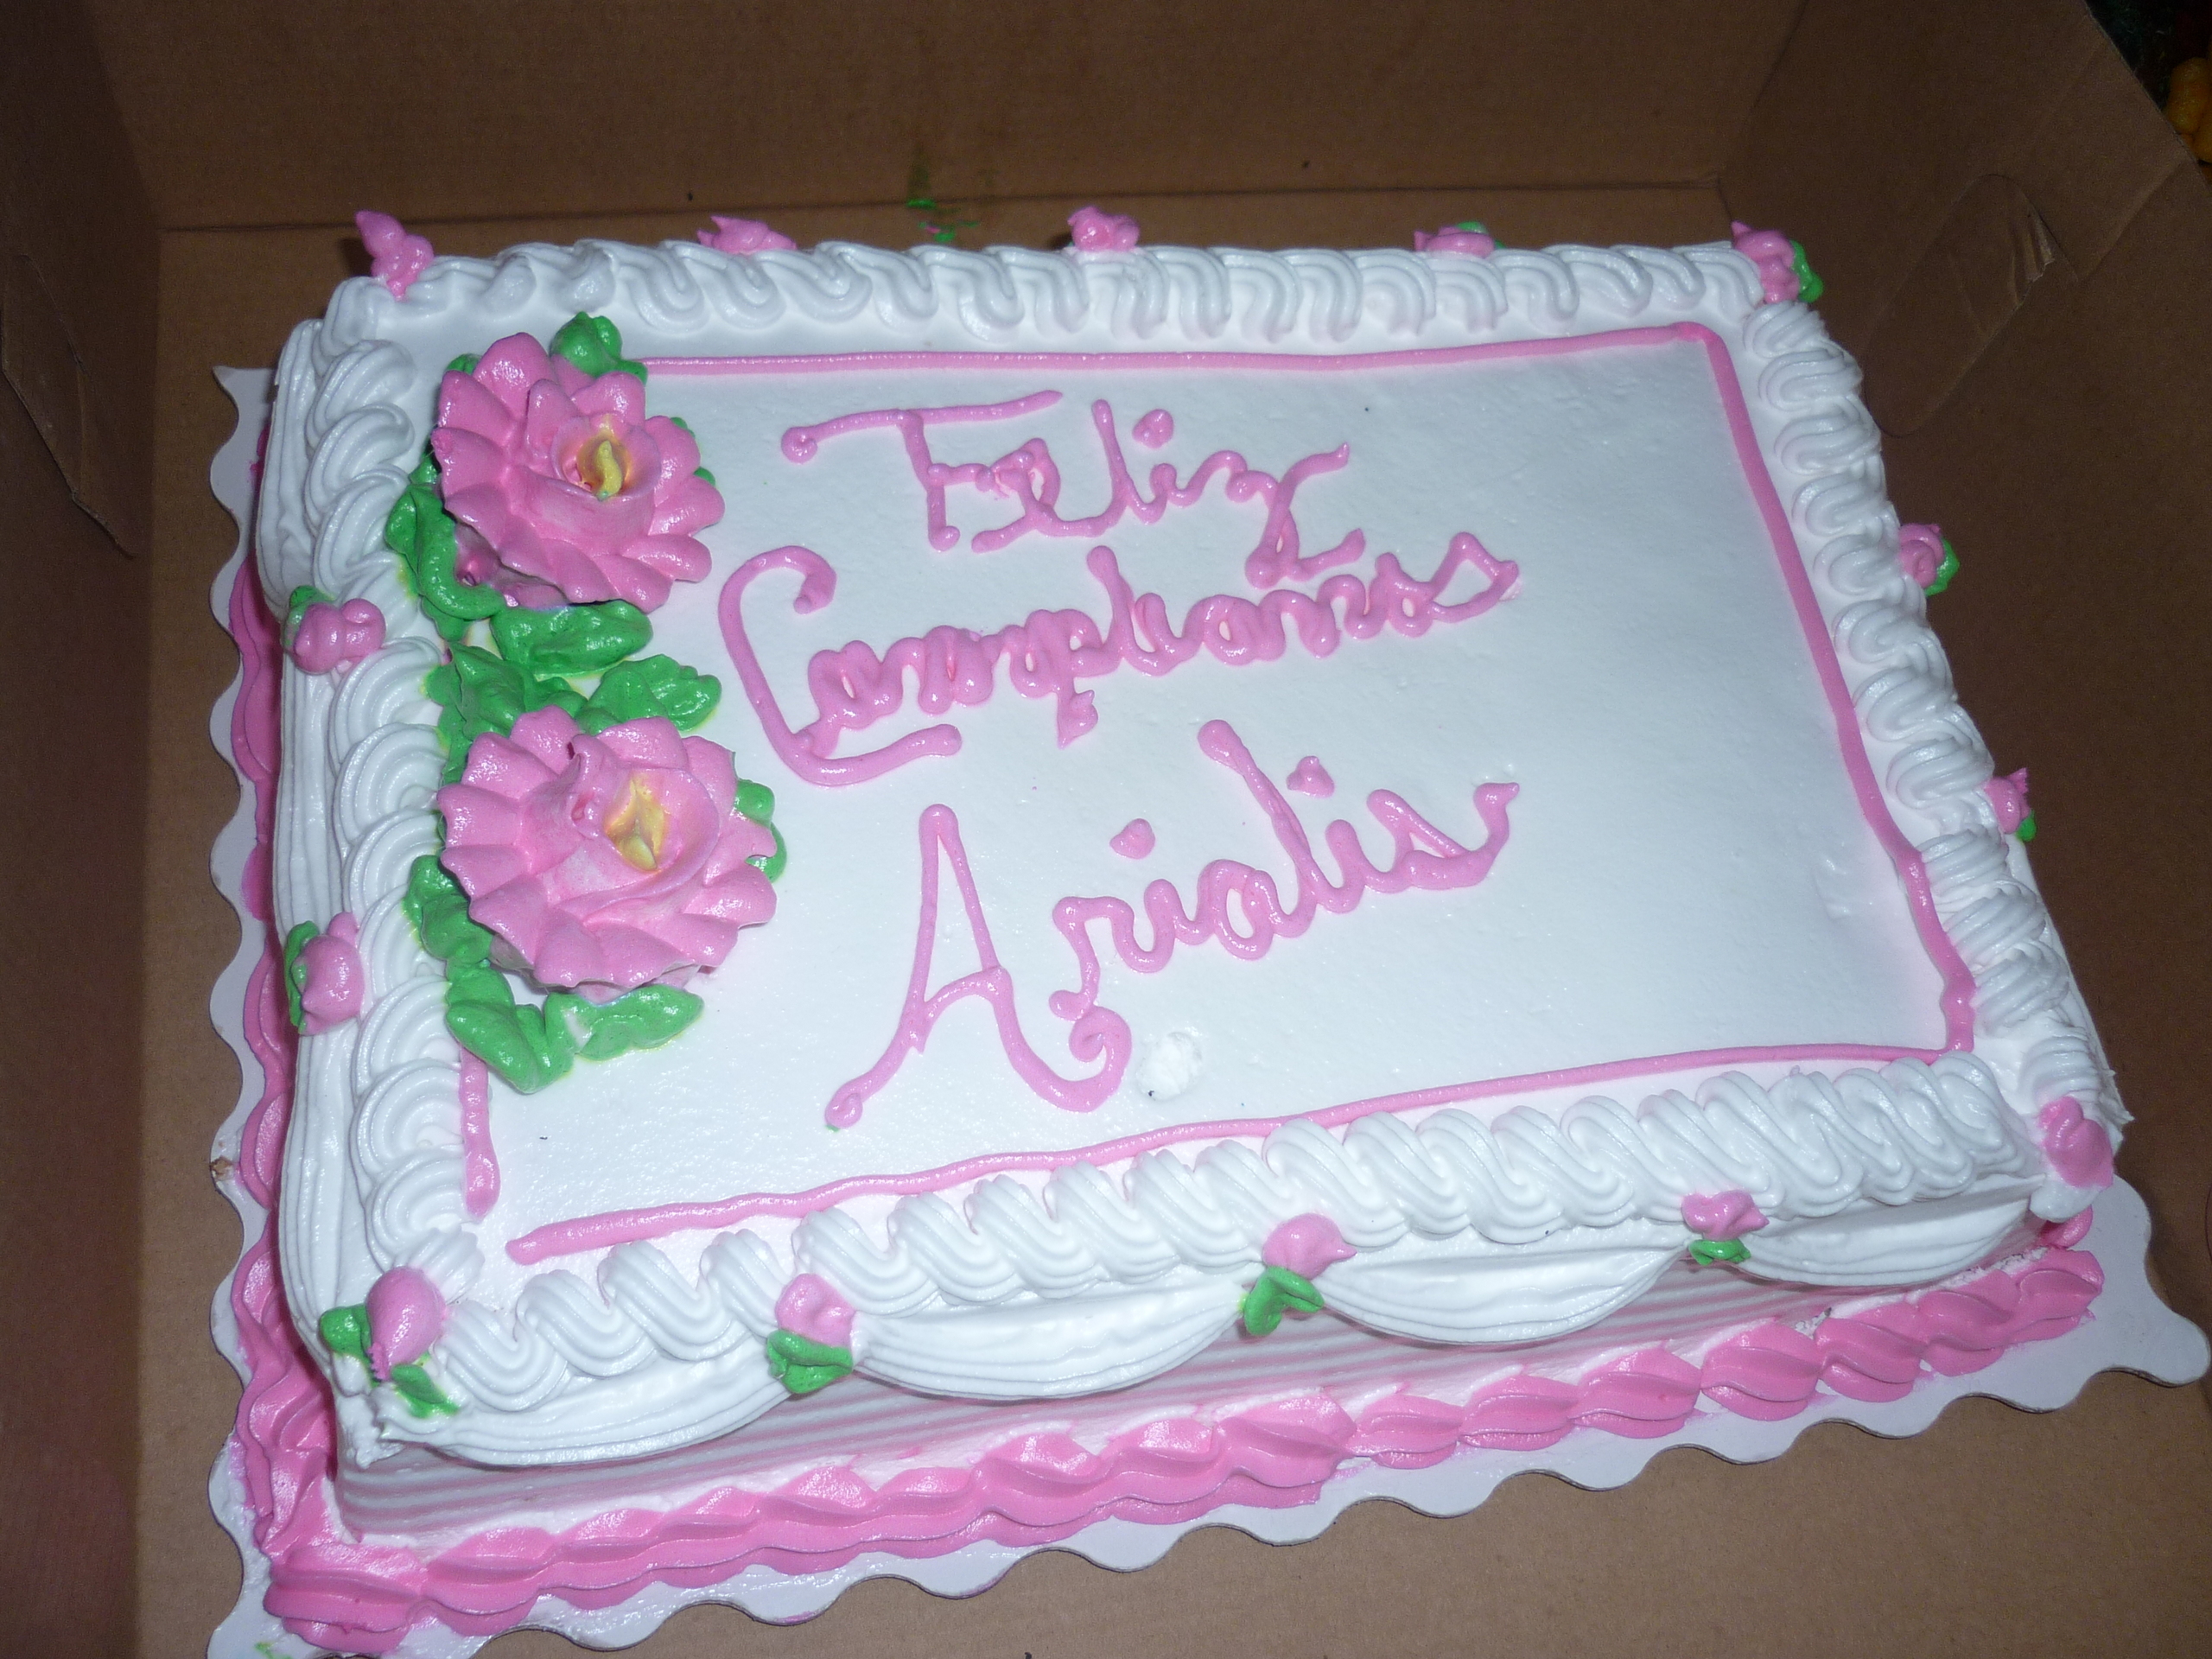 Arialis Birthday Cake - Republic of Panama